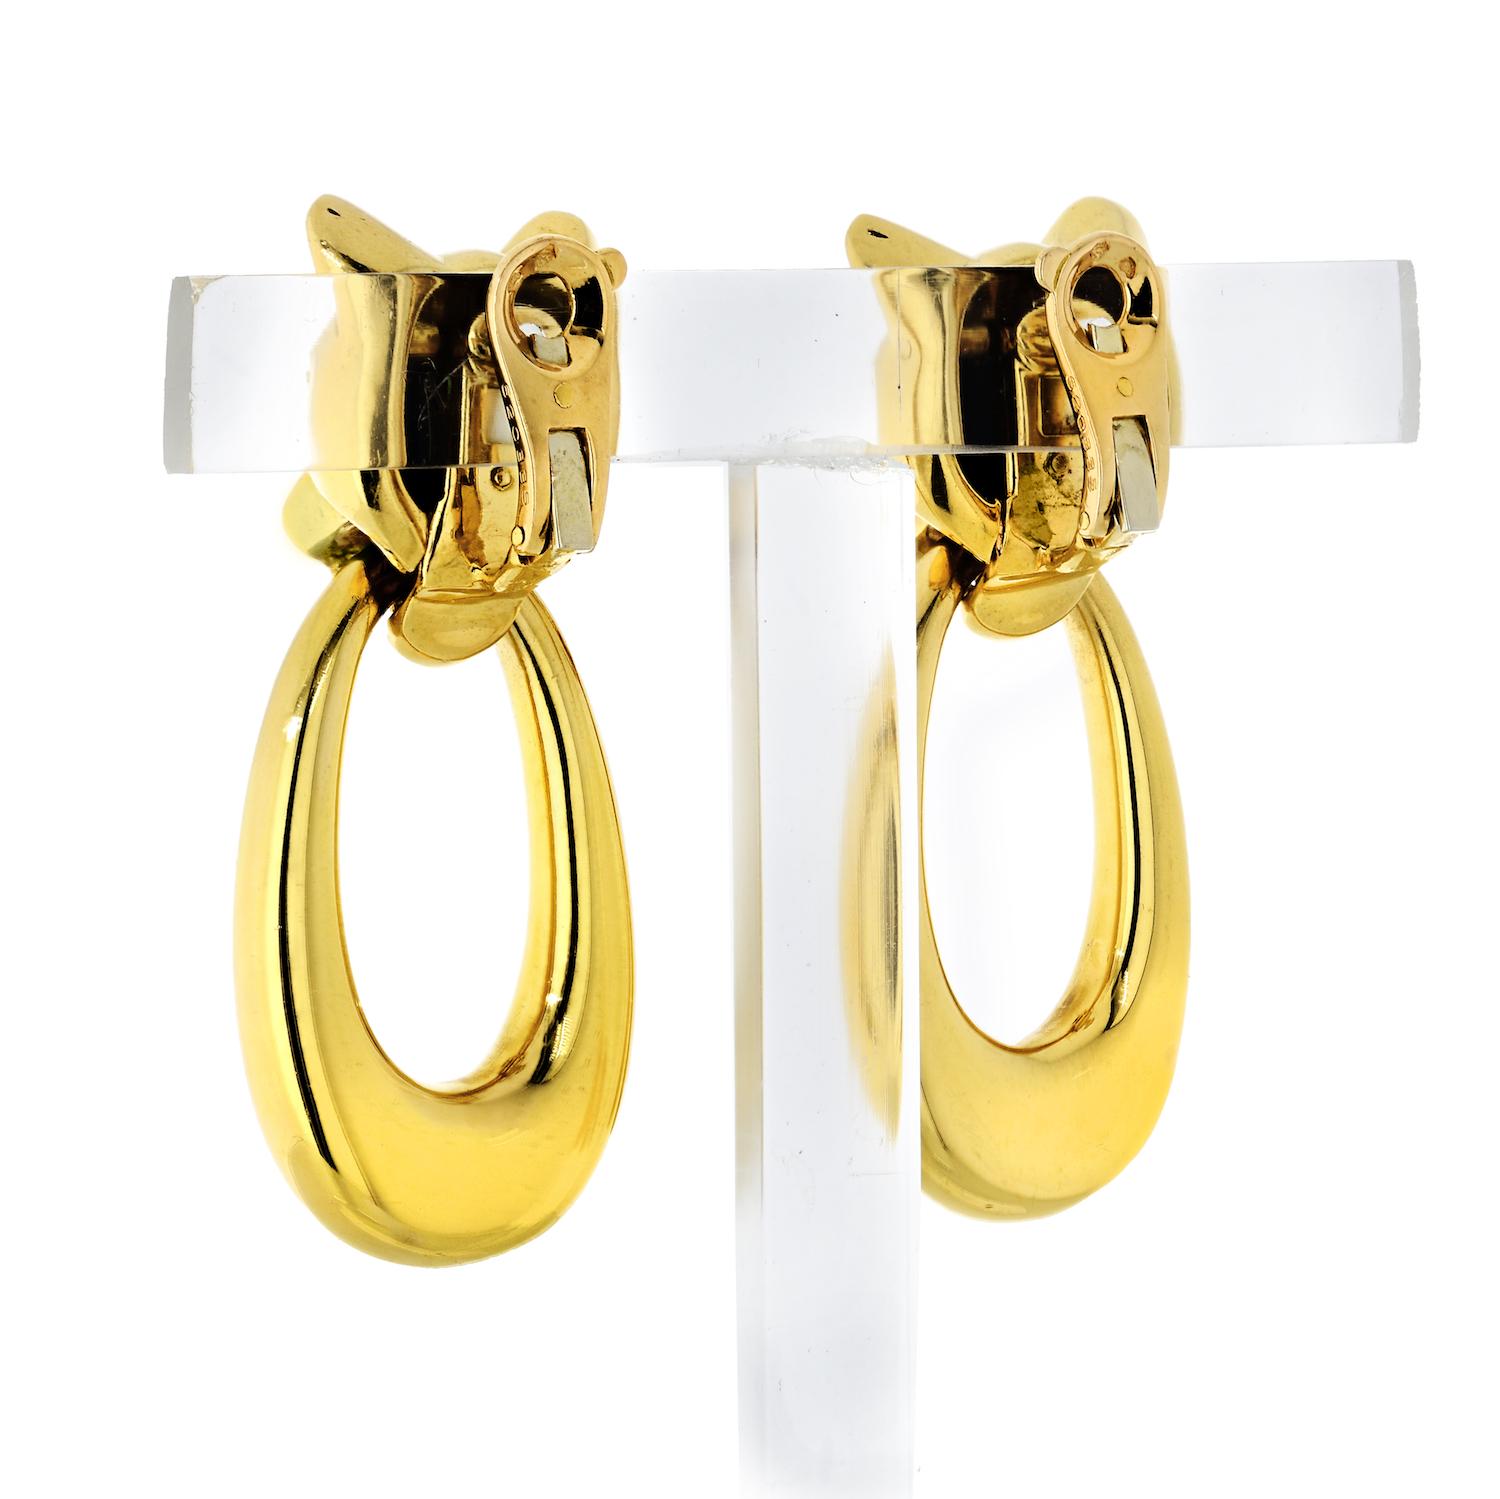 gold knocker earrings